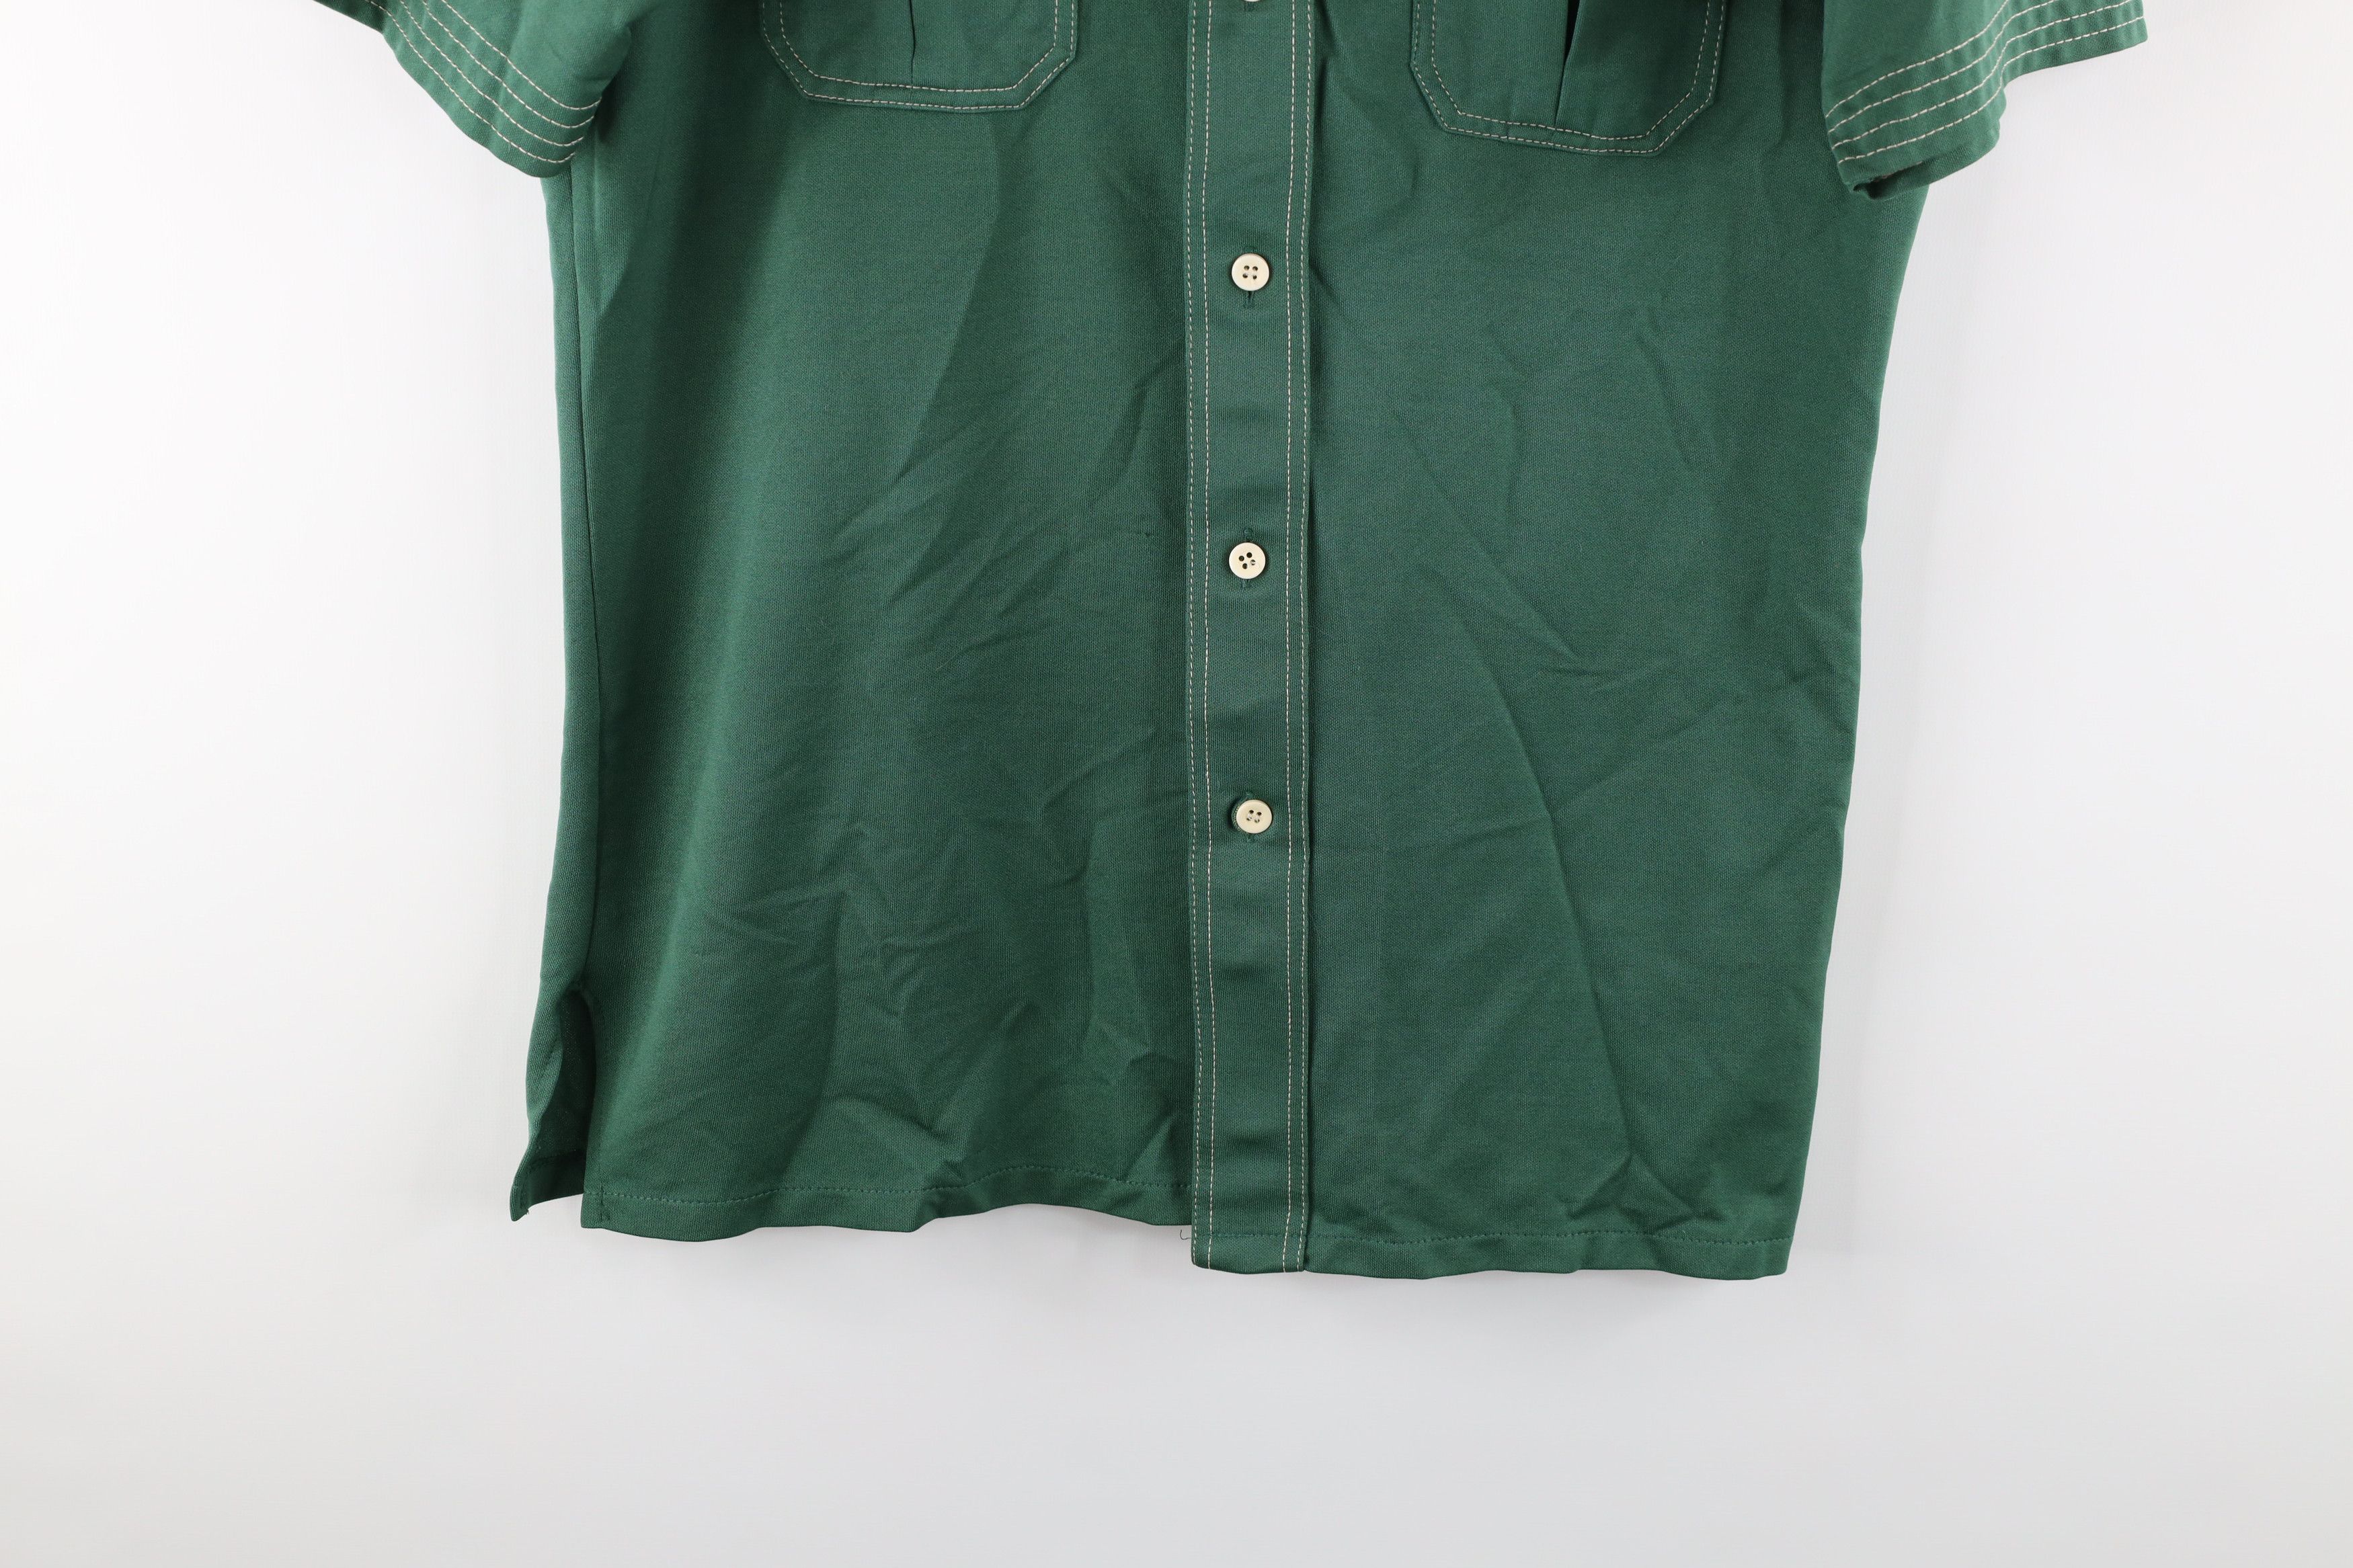 Vintage Vintage 60s Rockabilly Knit Collared Button Shirt Green Size US M / EU 48-50 / 2 - 3 Thumbnail